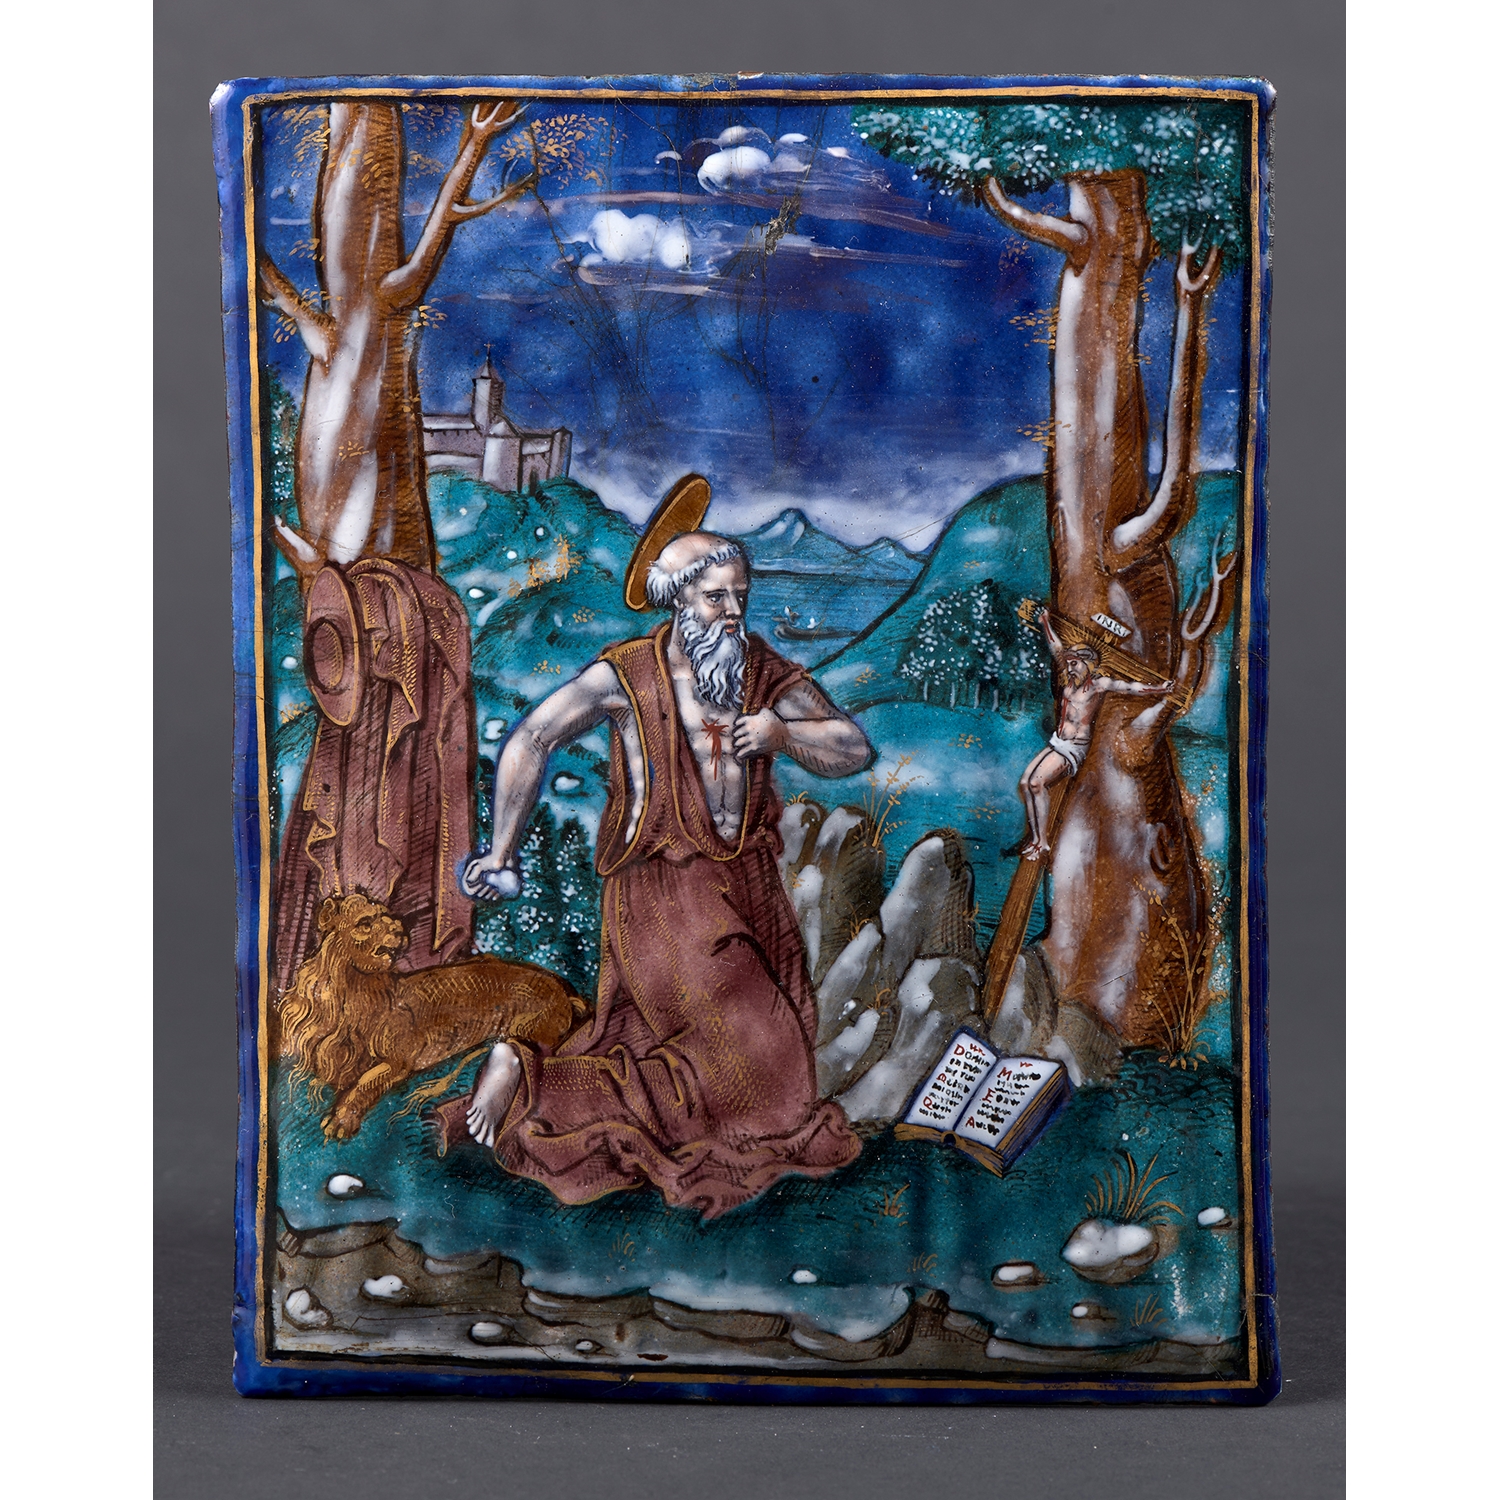 ENAMEL PLAQUE WITH THE PENITENT SAINT JEROME LIMOGES CIRCA 1530-15550